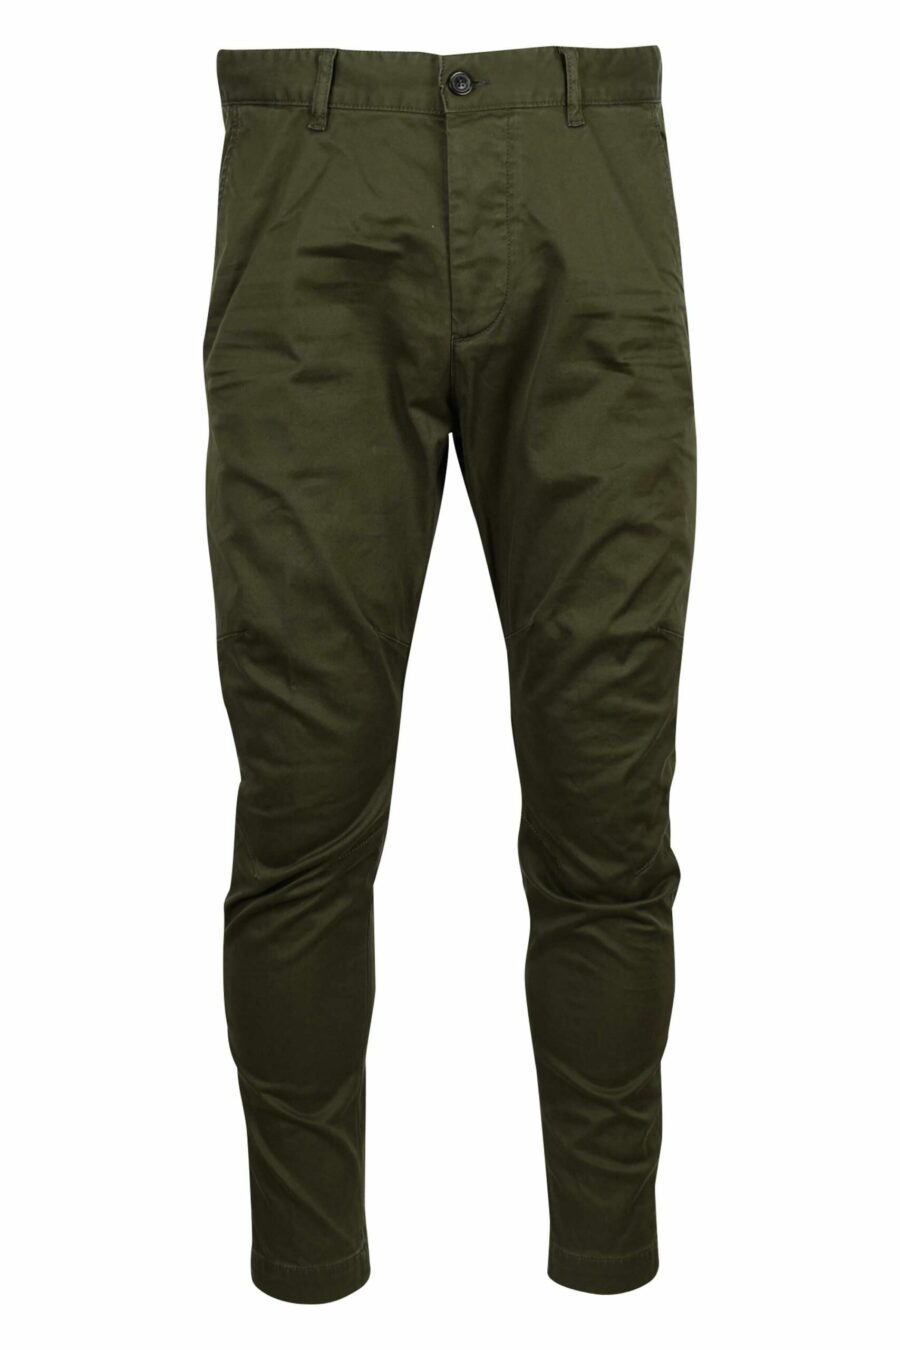 Pantalón verde militar "sexy chino" - 8054148321741 scaled